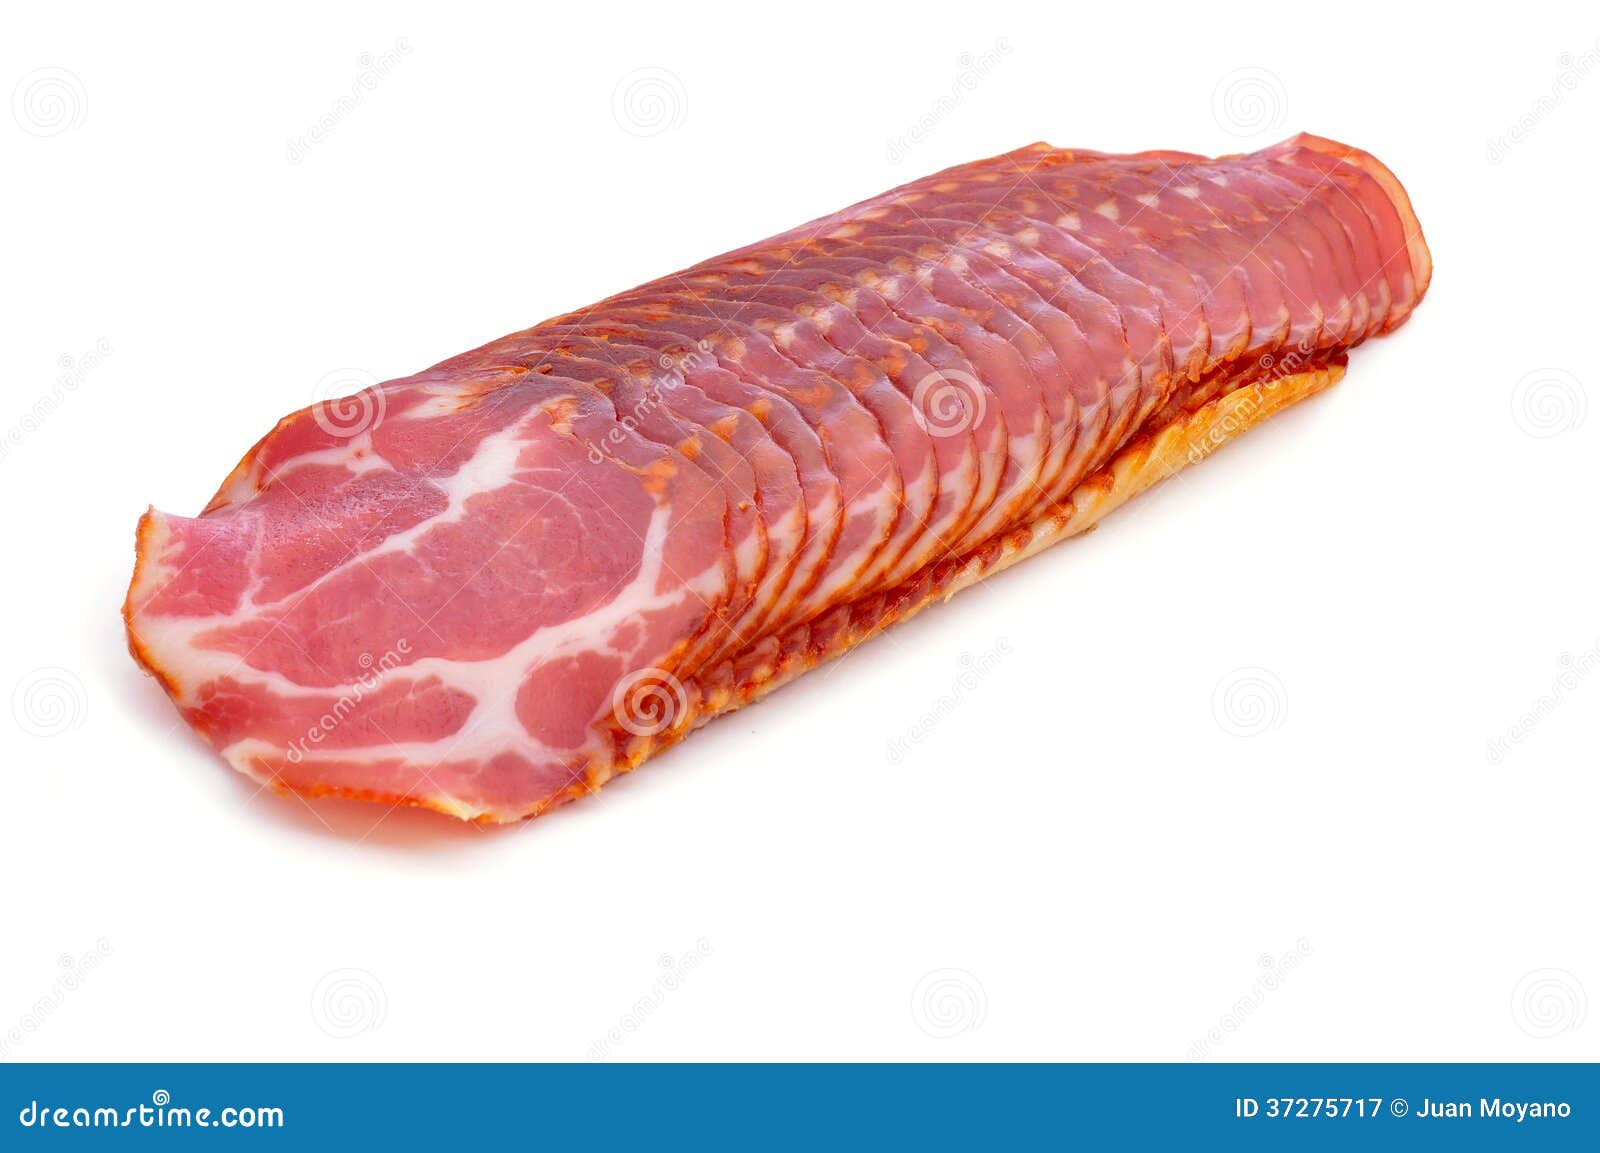 lomo embuchado, pork meat cold cuts typical of spain